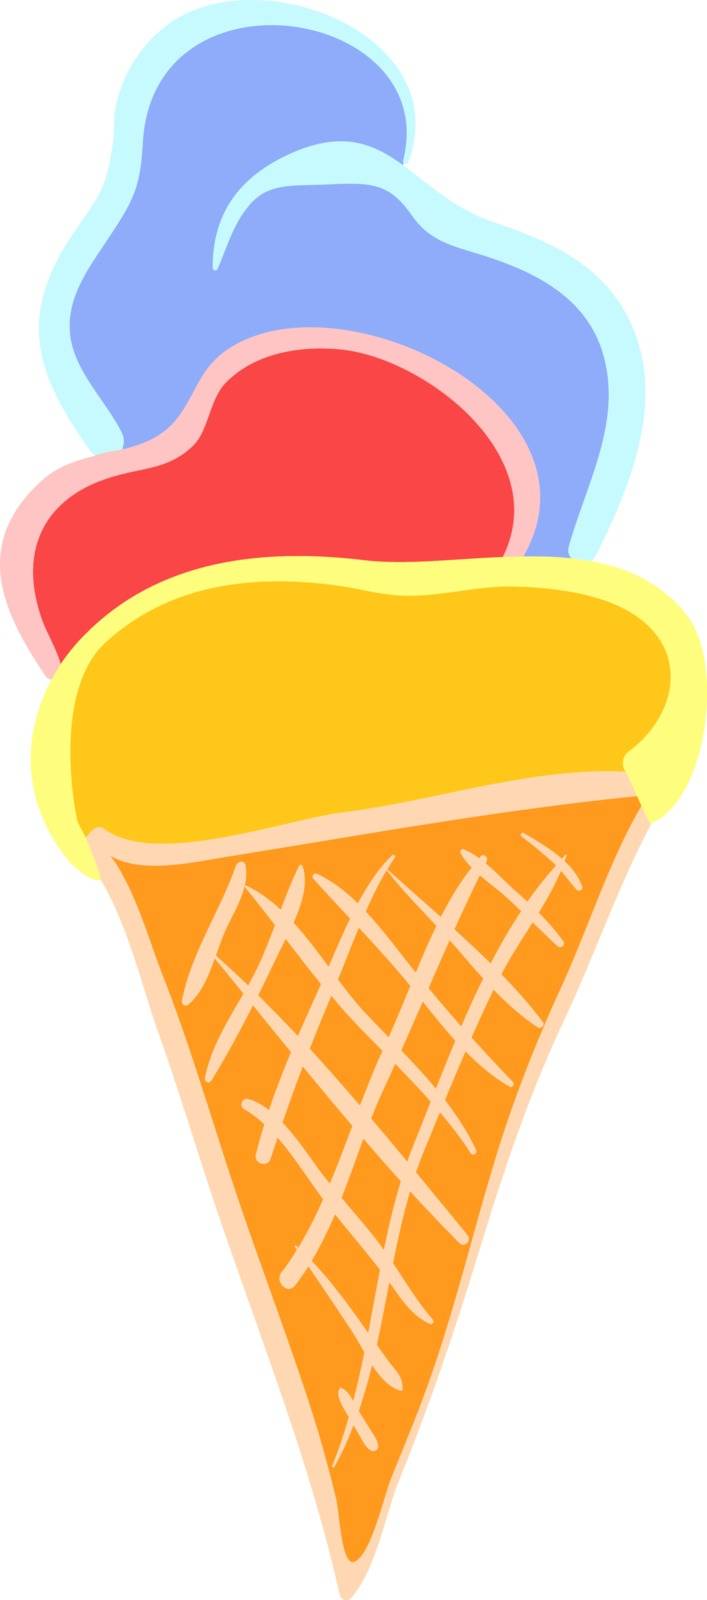 Cute colorful hand drawn ice cream in waffle cone icon